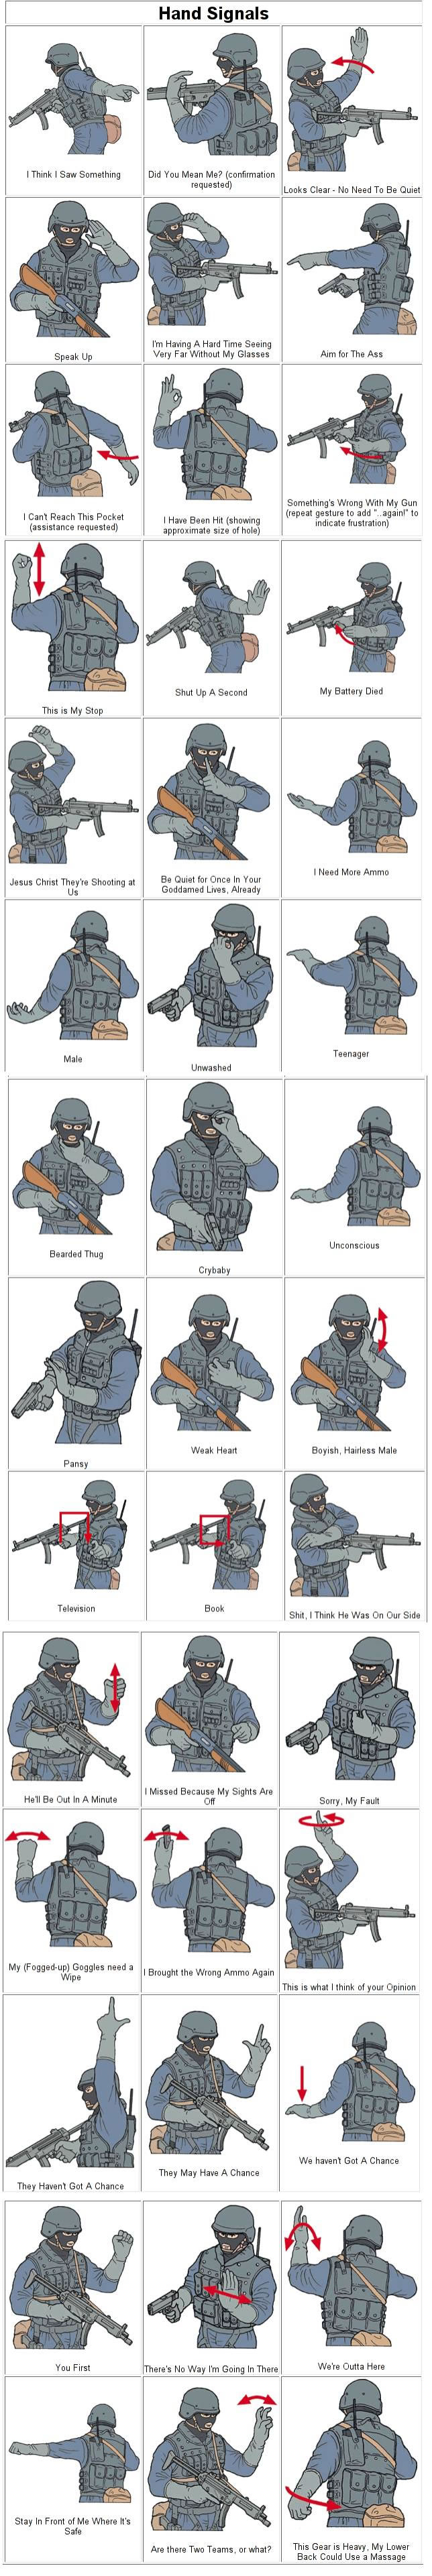 military hand signals representation